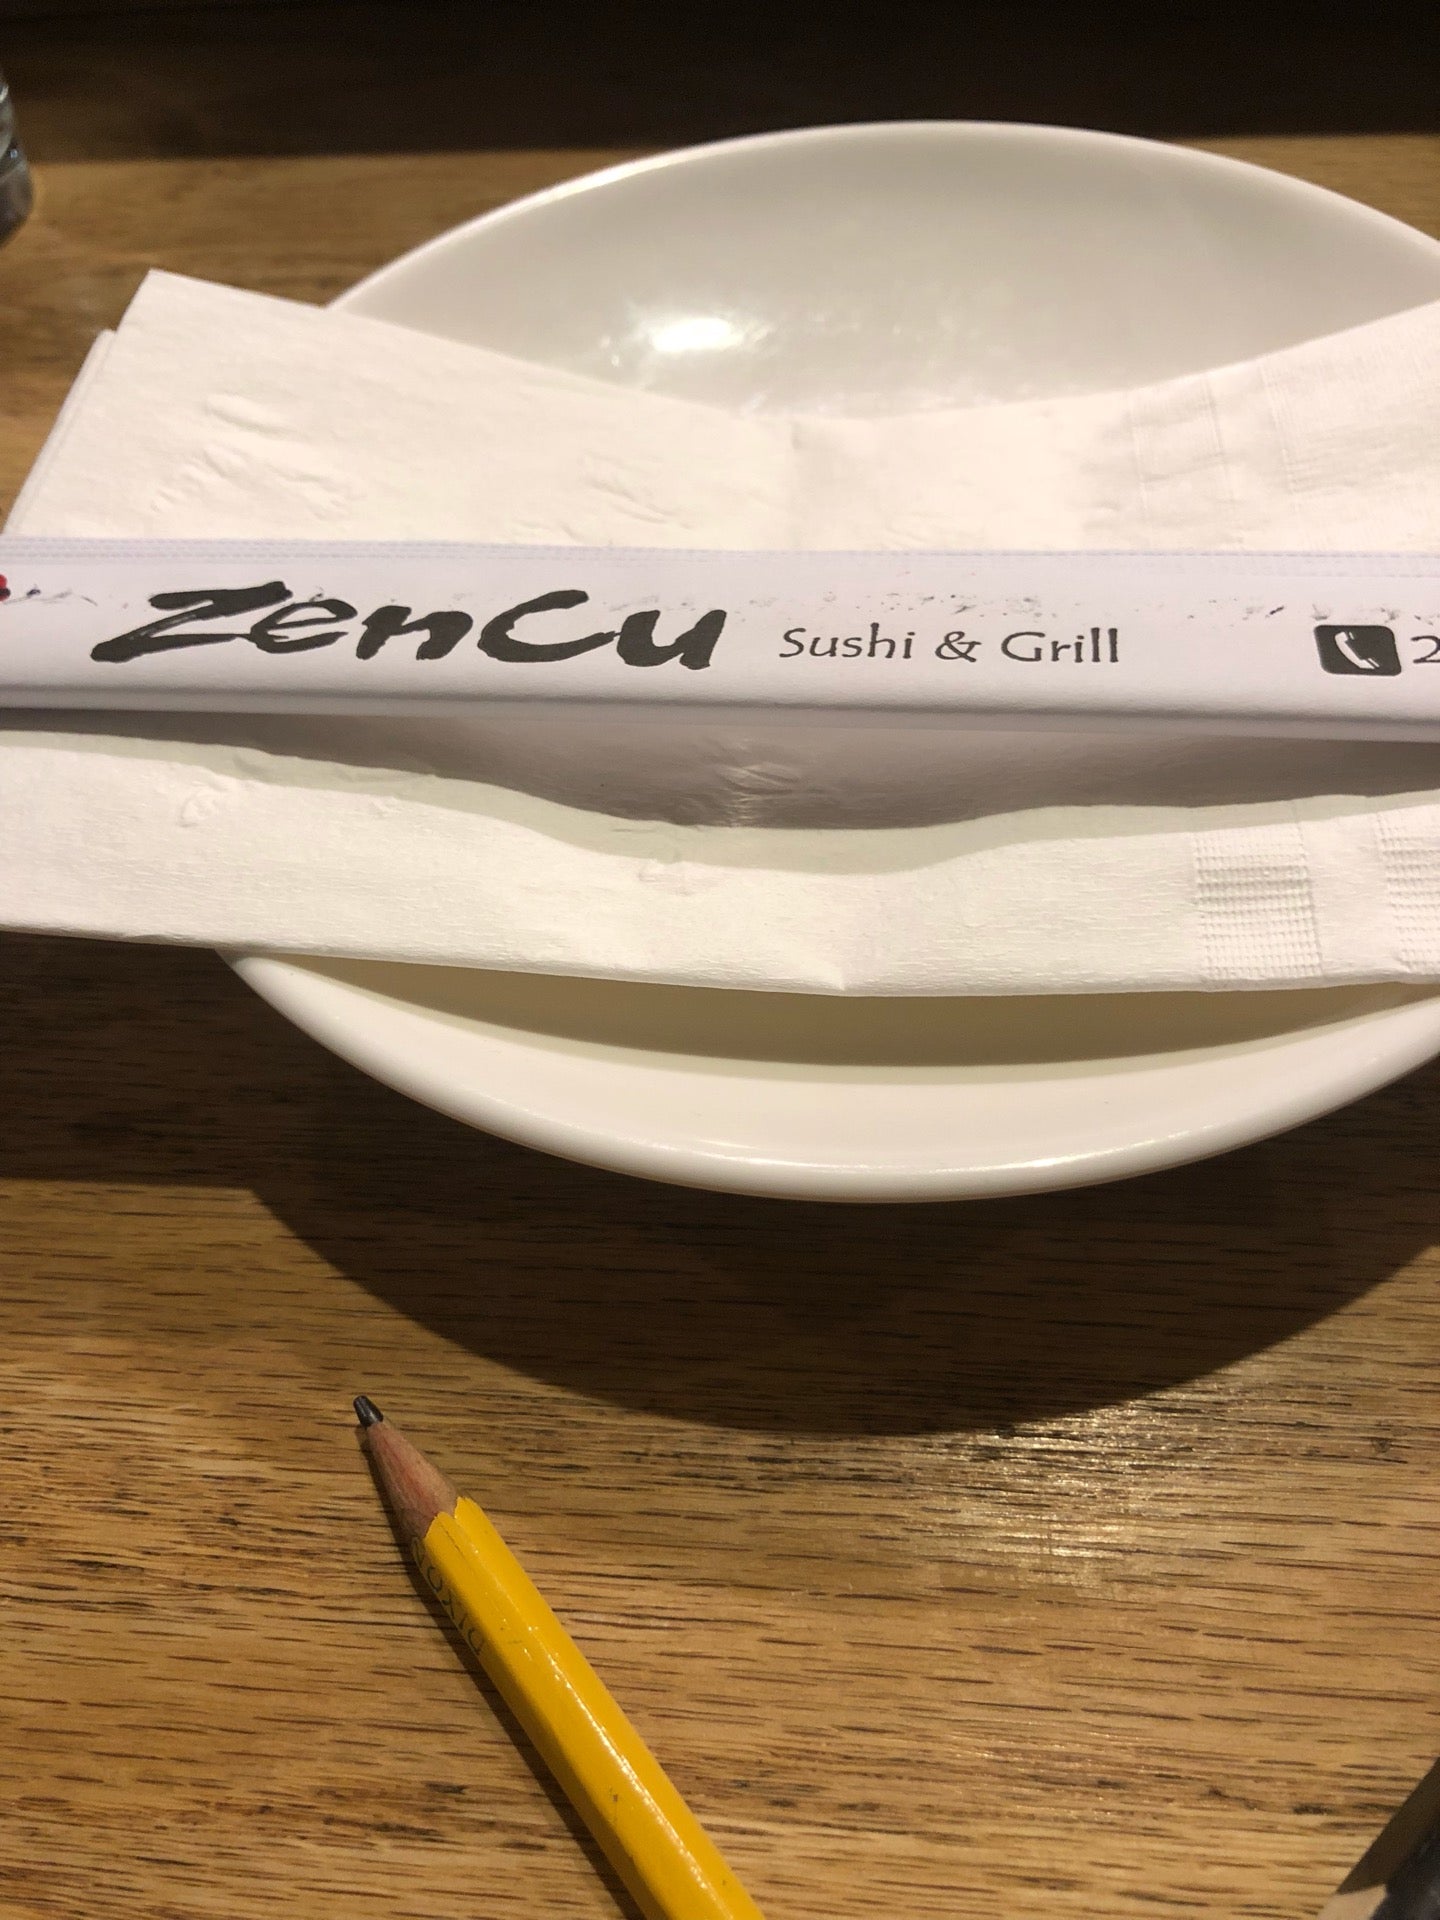 California Los Angeles Zencu Sushi & Grill photo 5